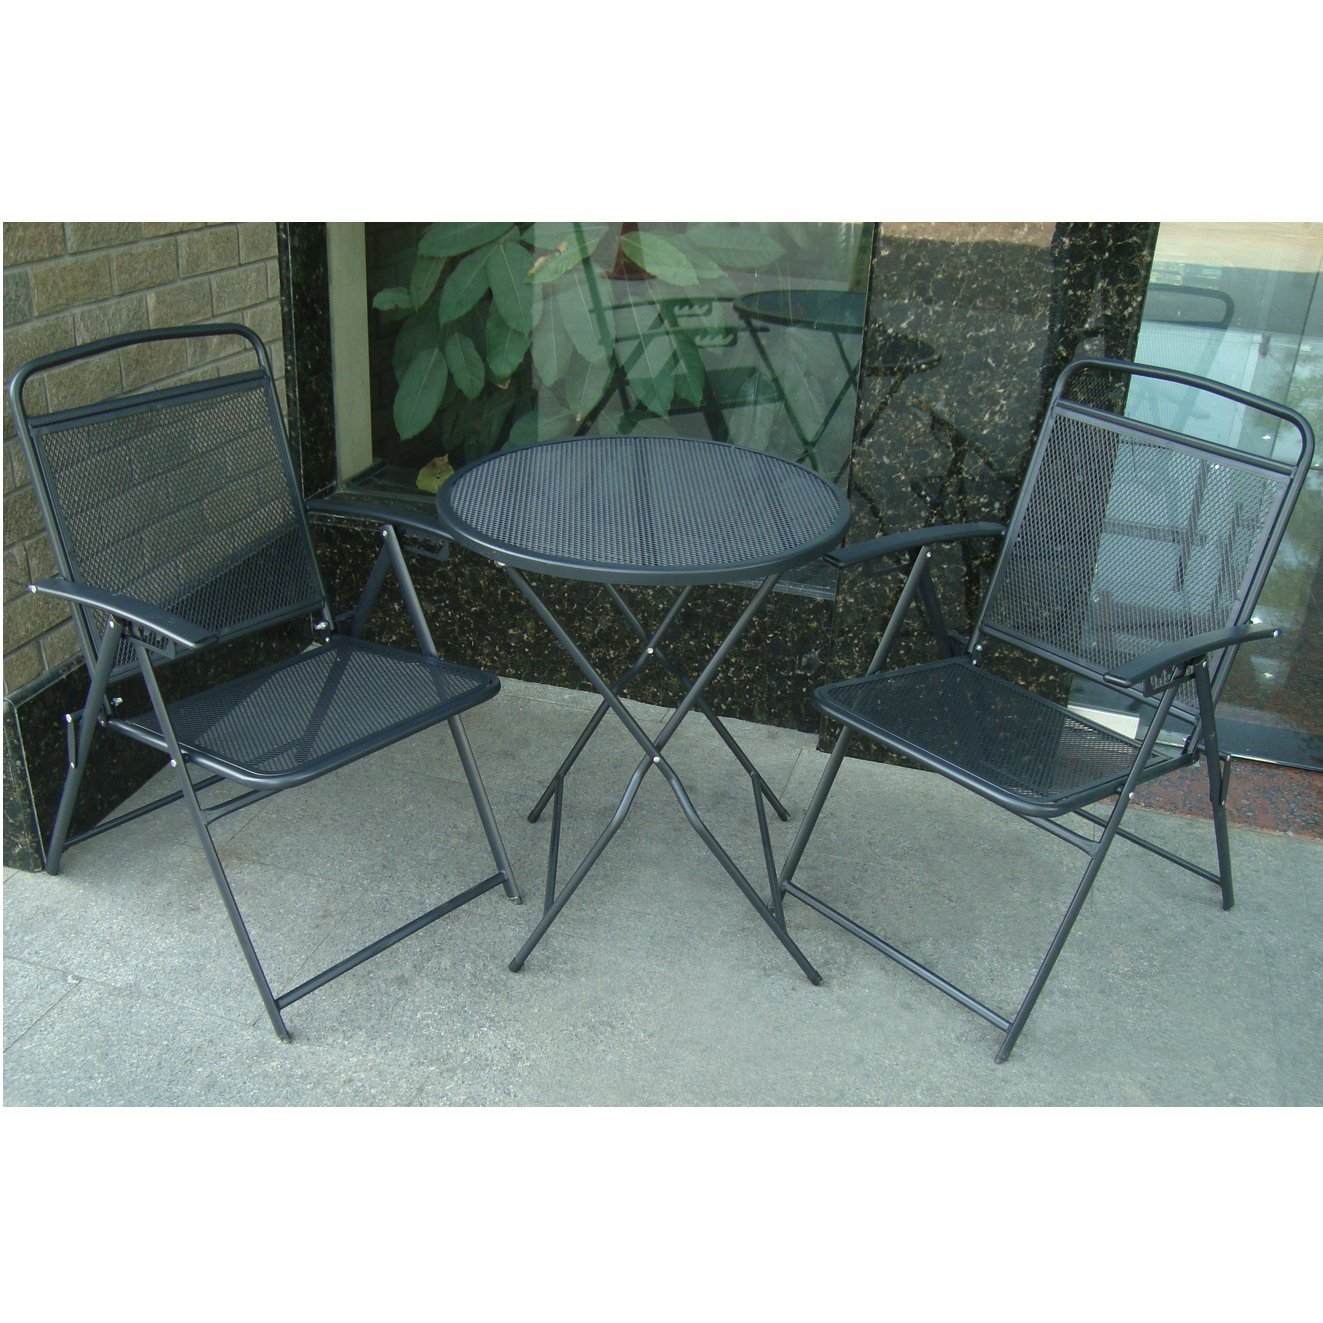 wrought iron patio furniture, bistro set, outdoor furniture